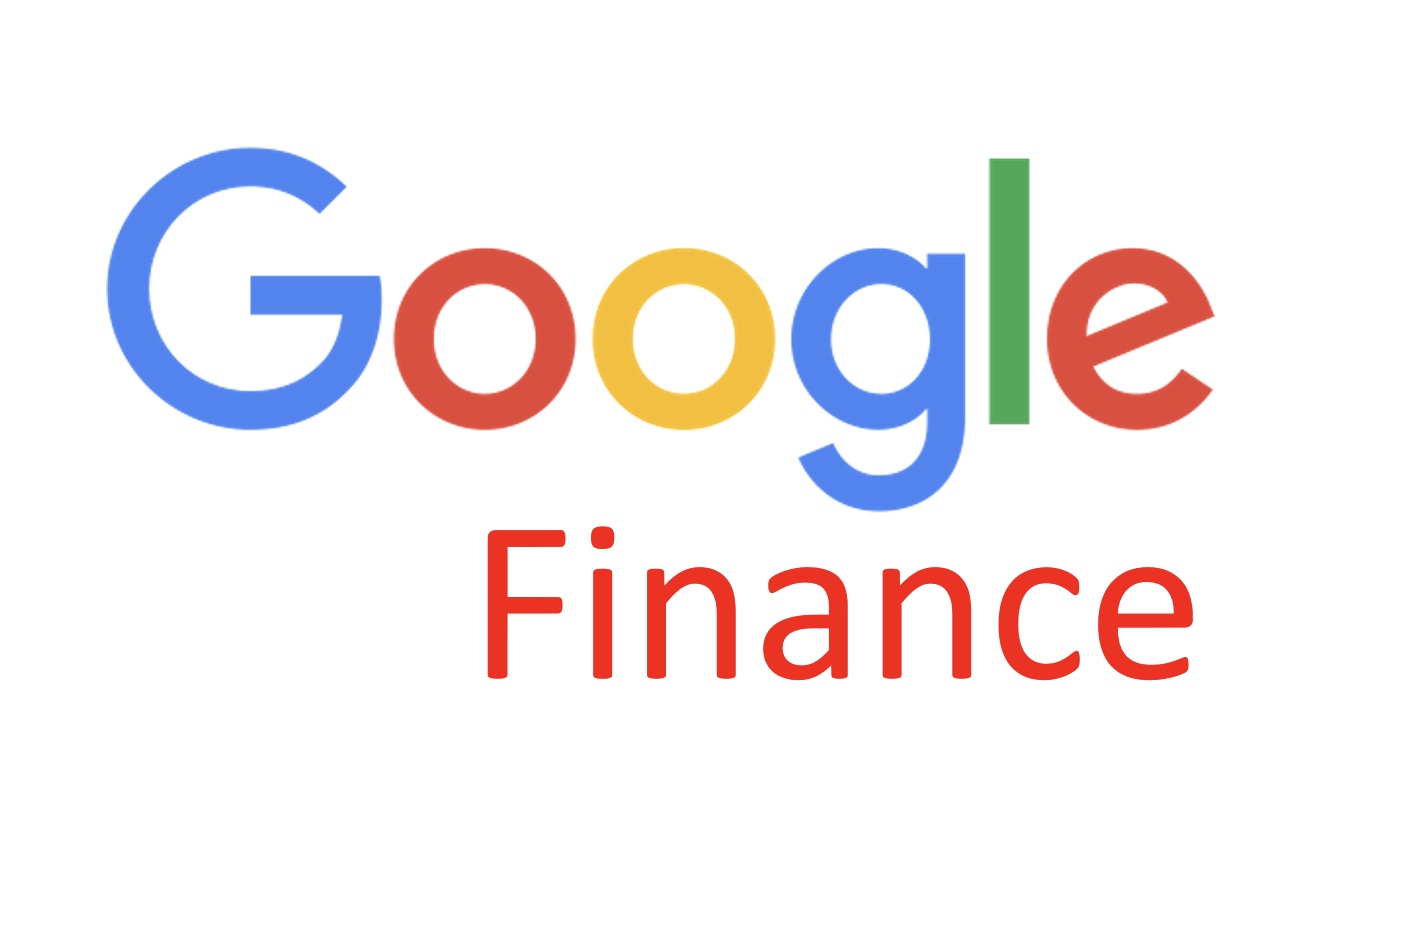 google finance toolbar shows no numb ers